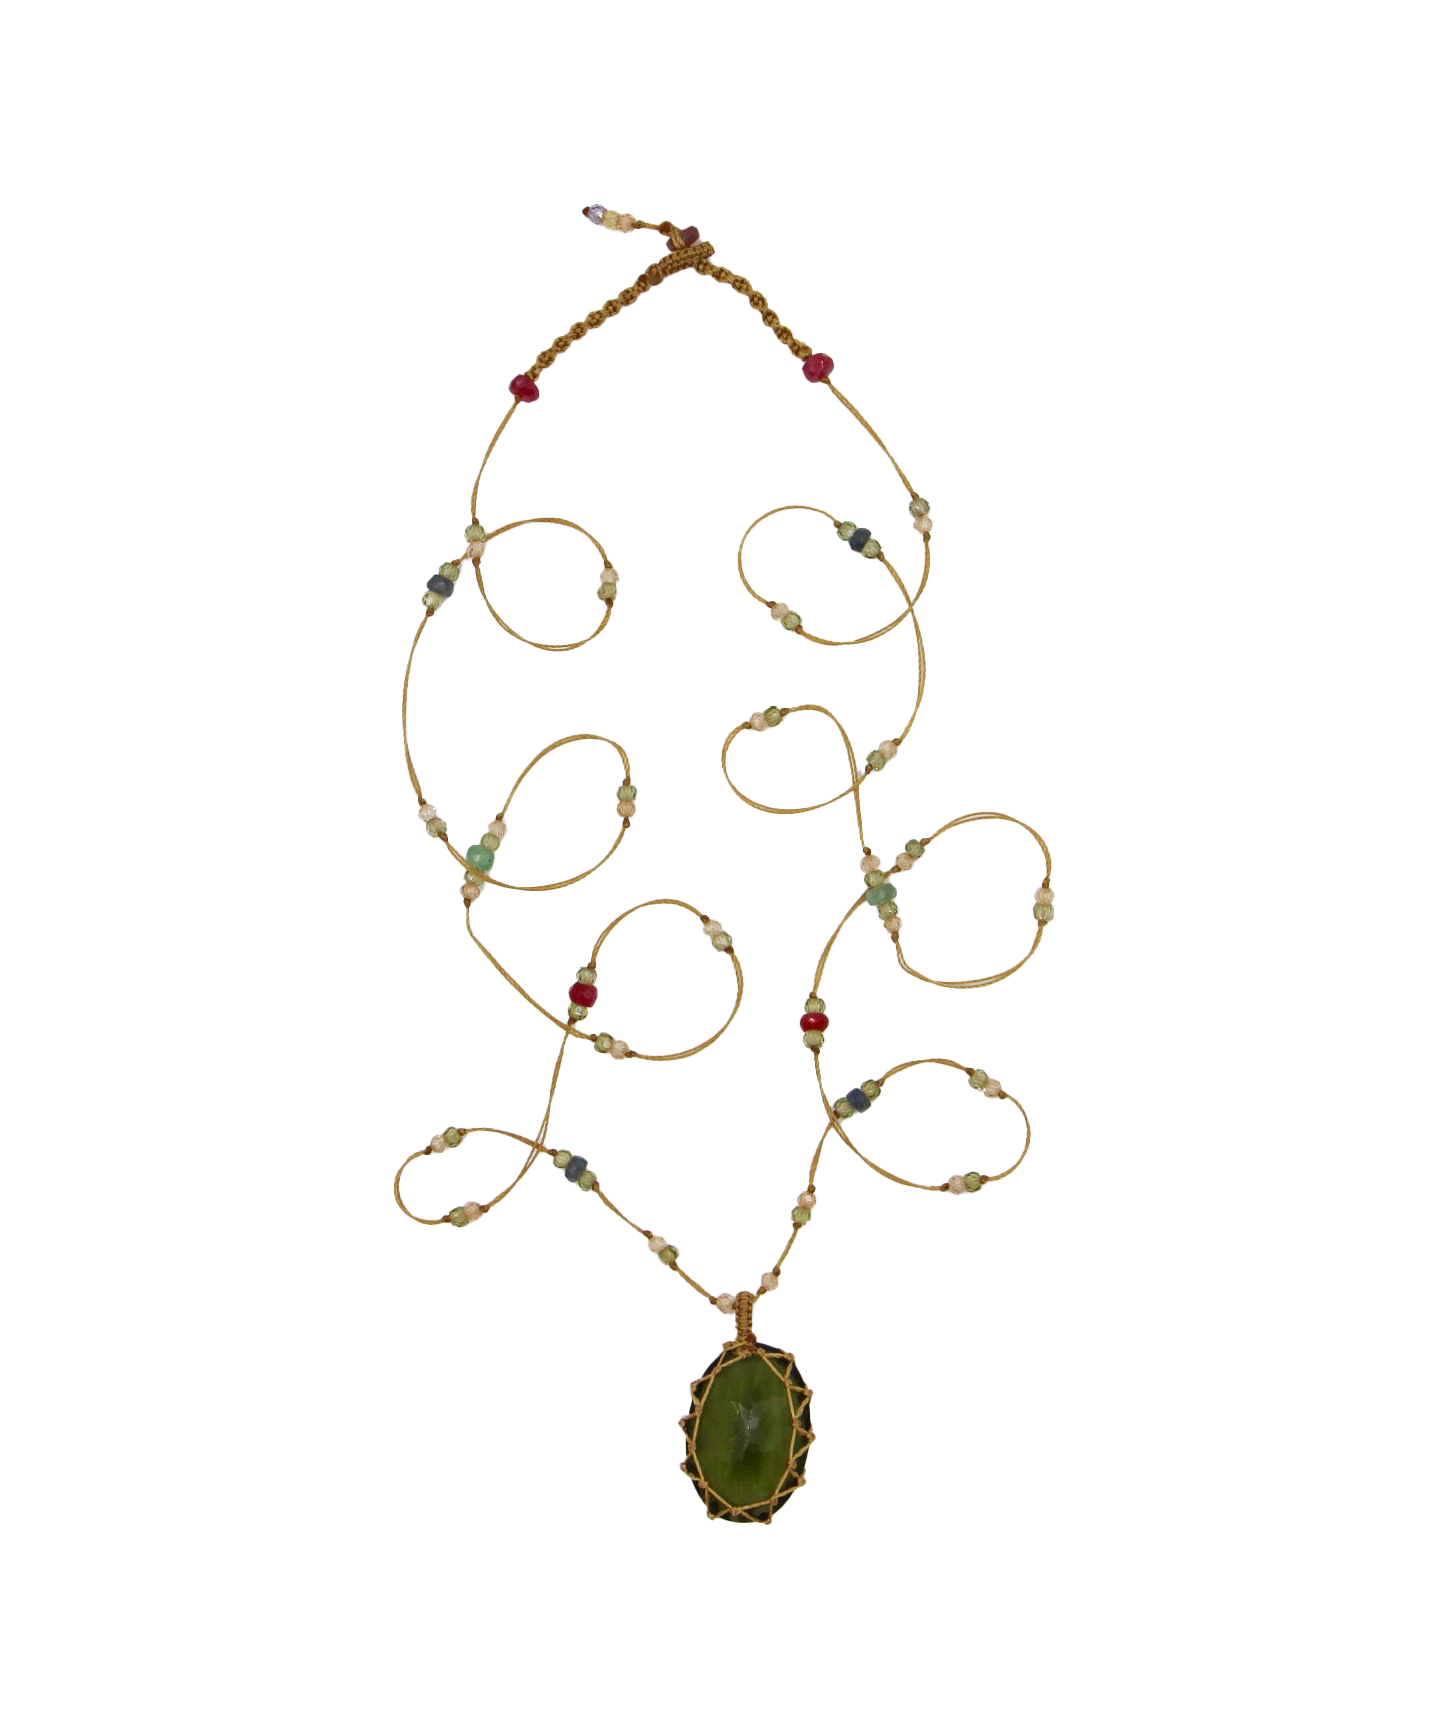 Tibetan Long Necklace - Moldavite - Aquamarine Mix - Beige Thread